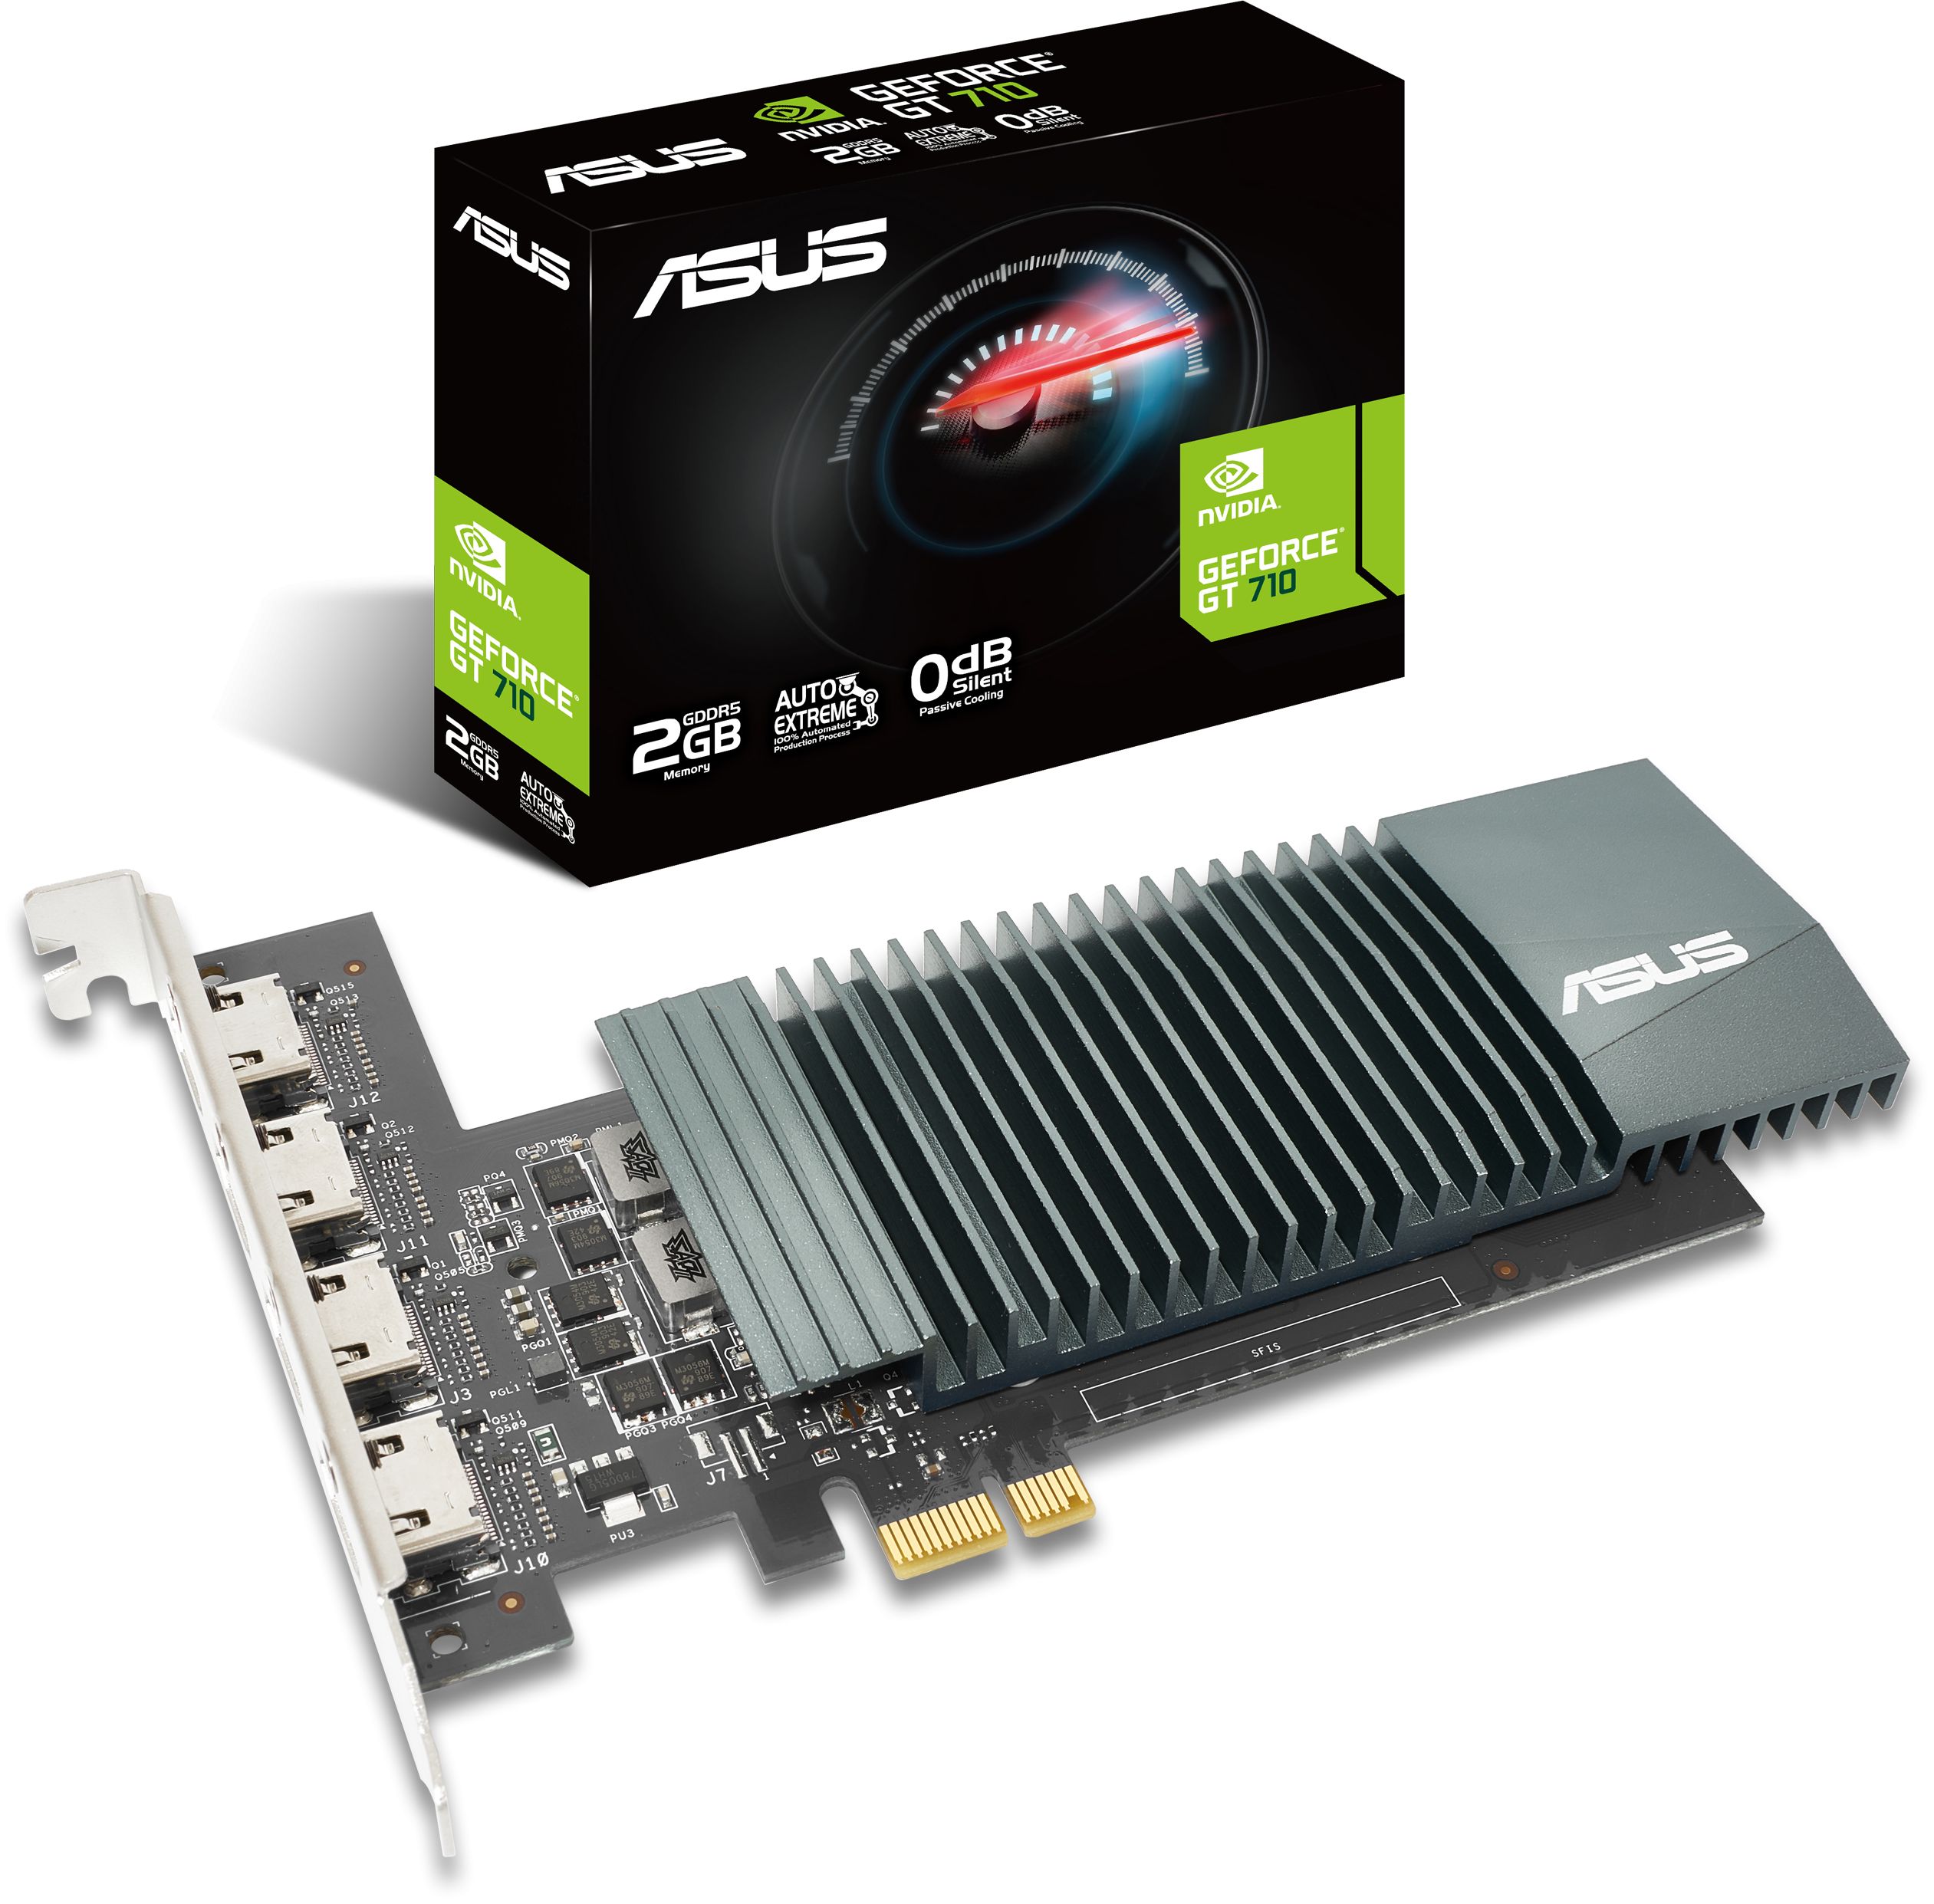 GeForce GT 710 Fanless GDDR5 2GB Graphics Card, 4x HDMI